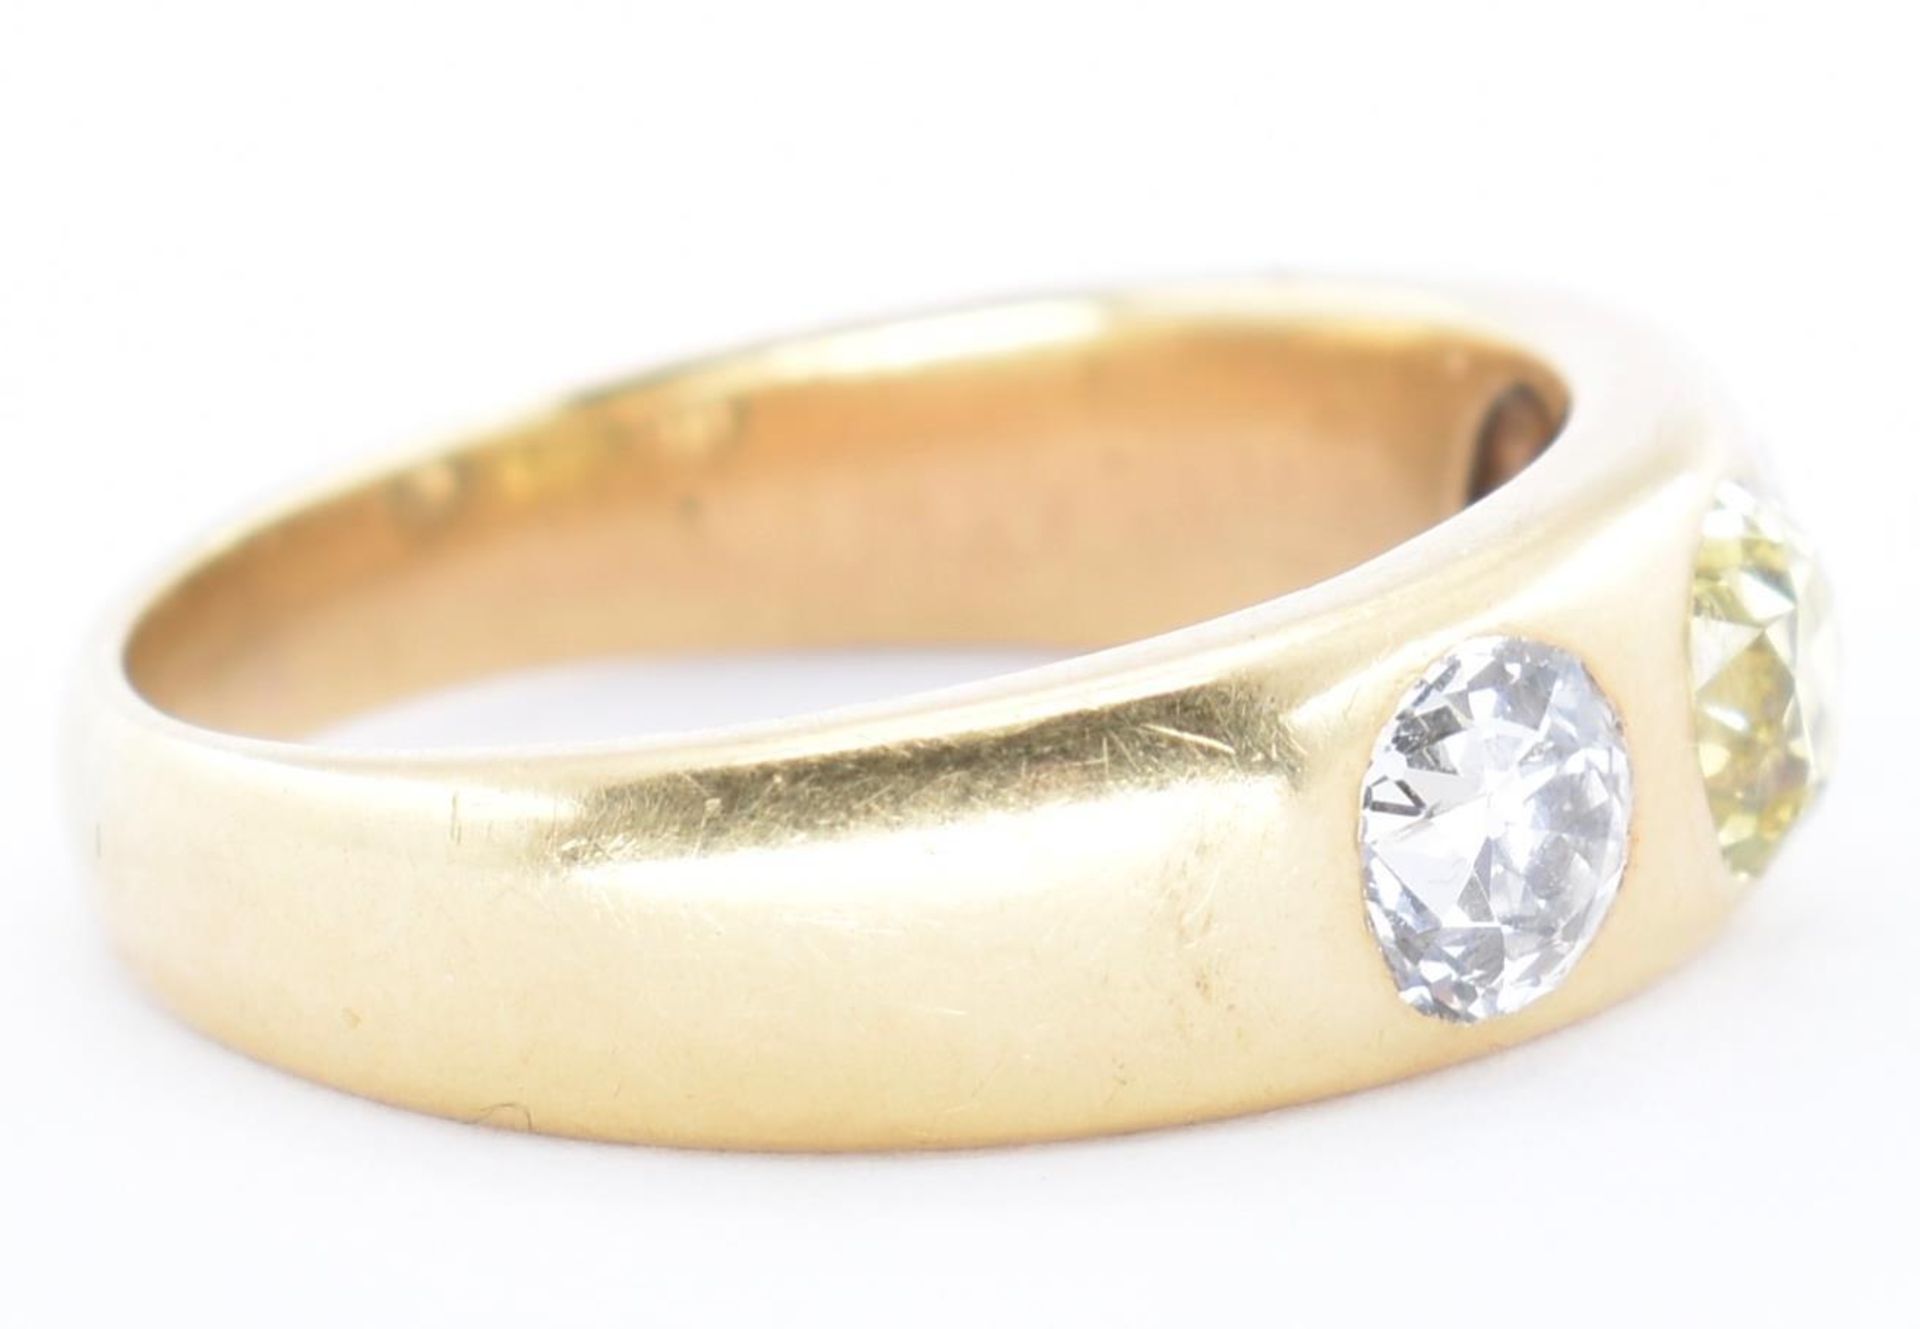 AN 18CT GOLD THREE STONE DIAMOND RING - Image 2 of 5